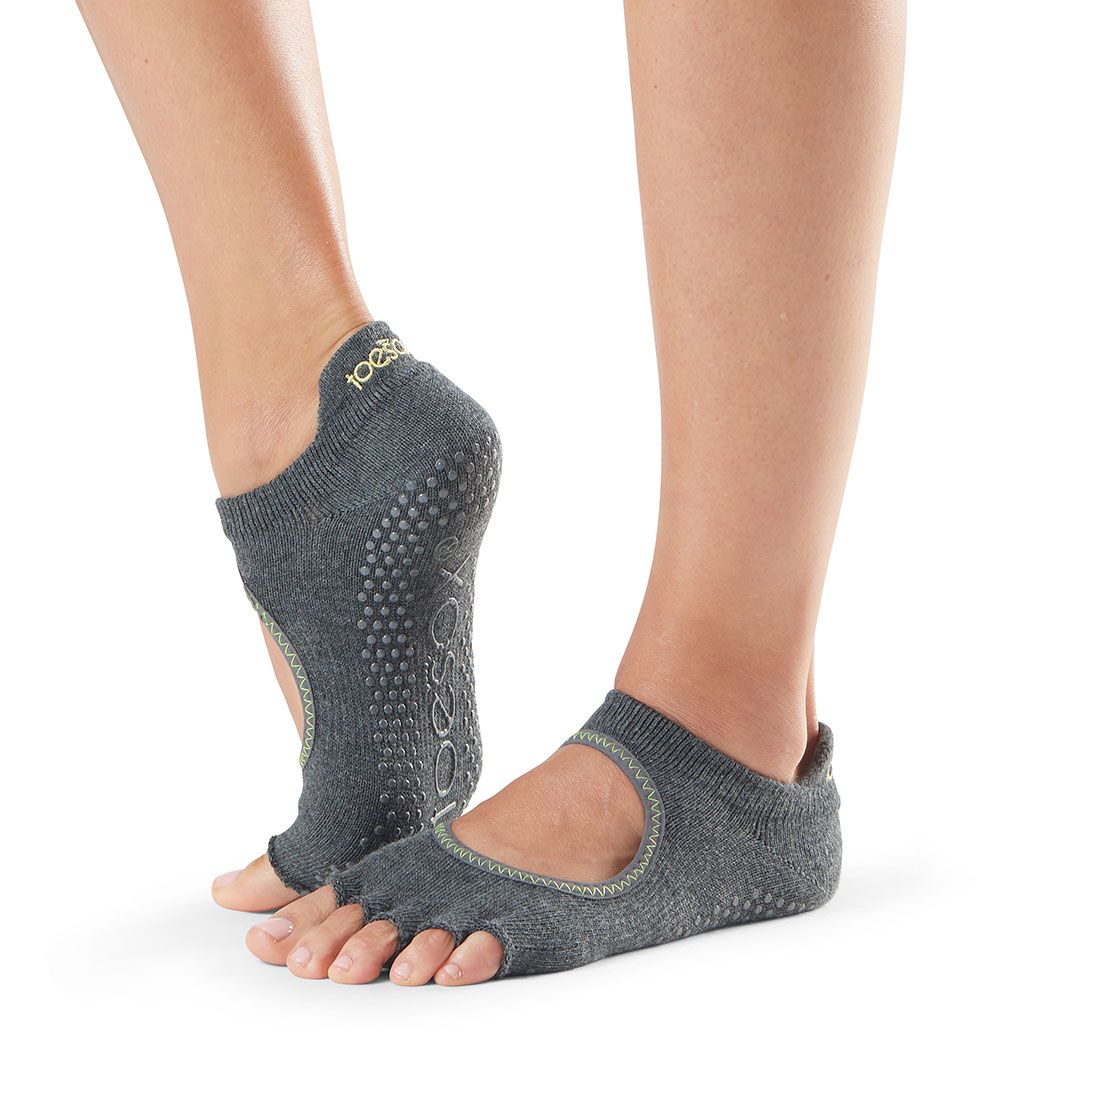 ToeSox Bellarina Half Toe - dark grey pilates yoga socks with open toes and grip sole